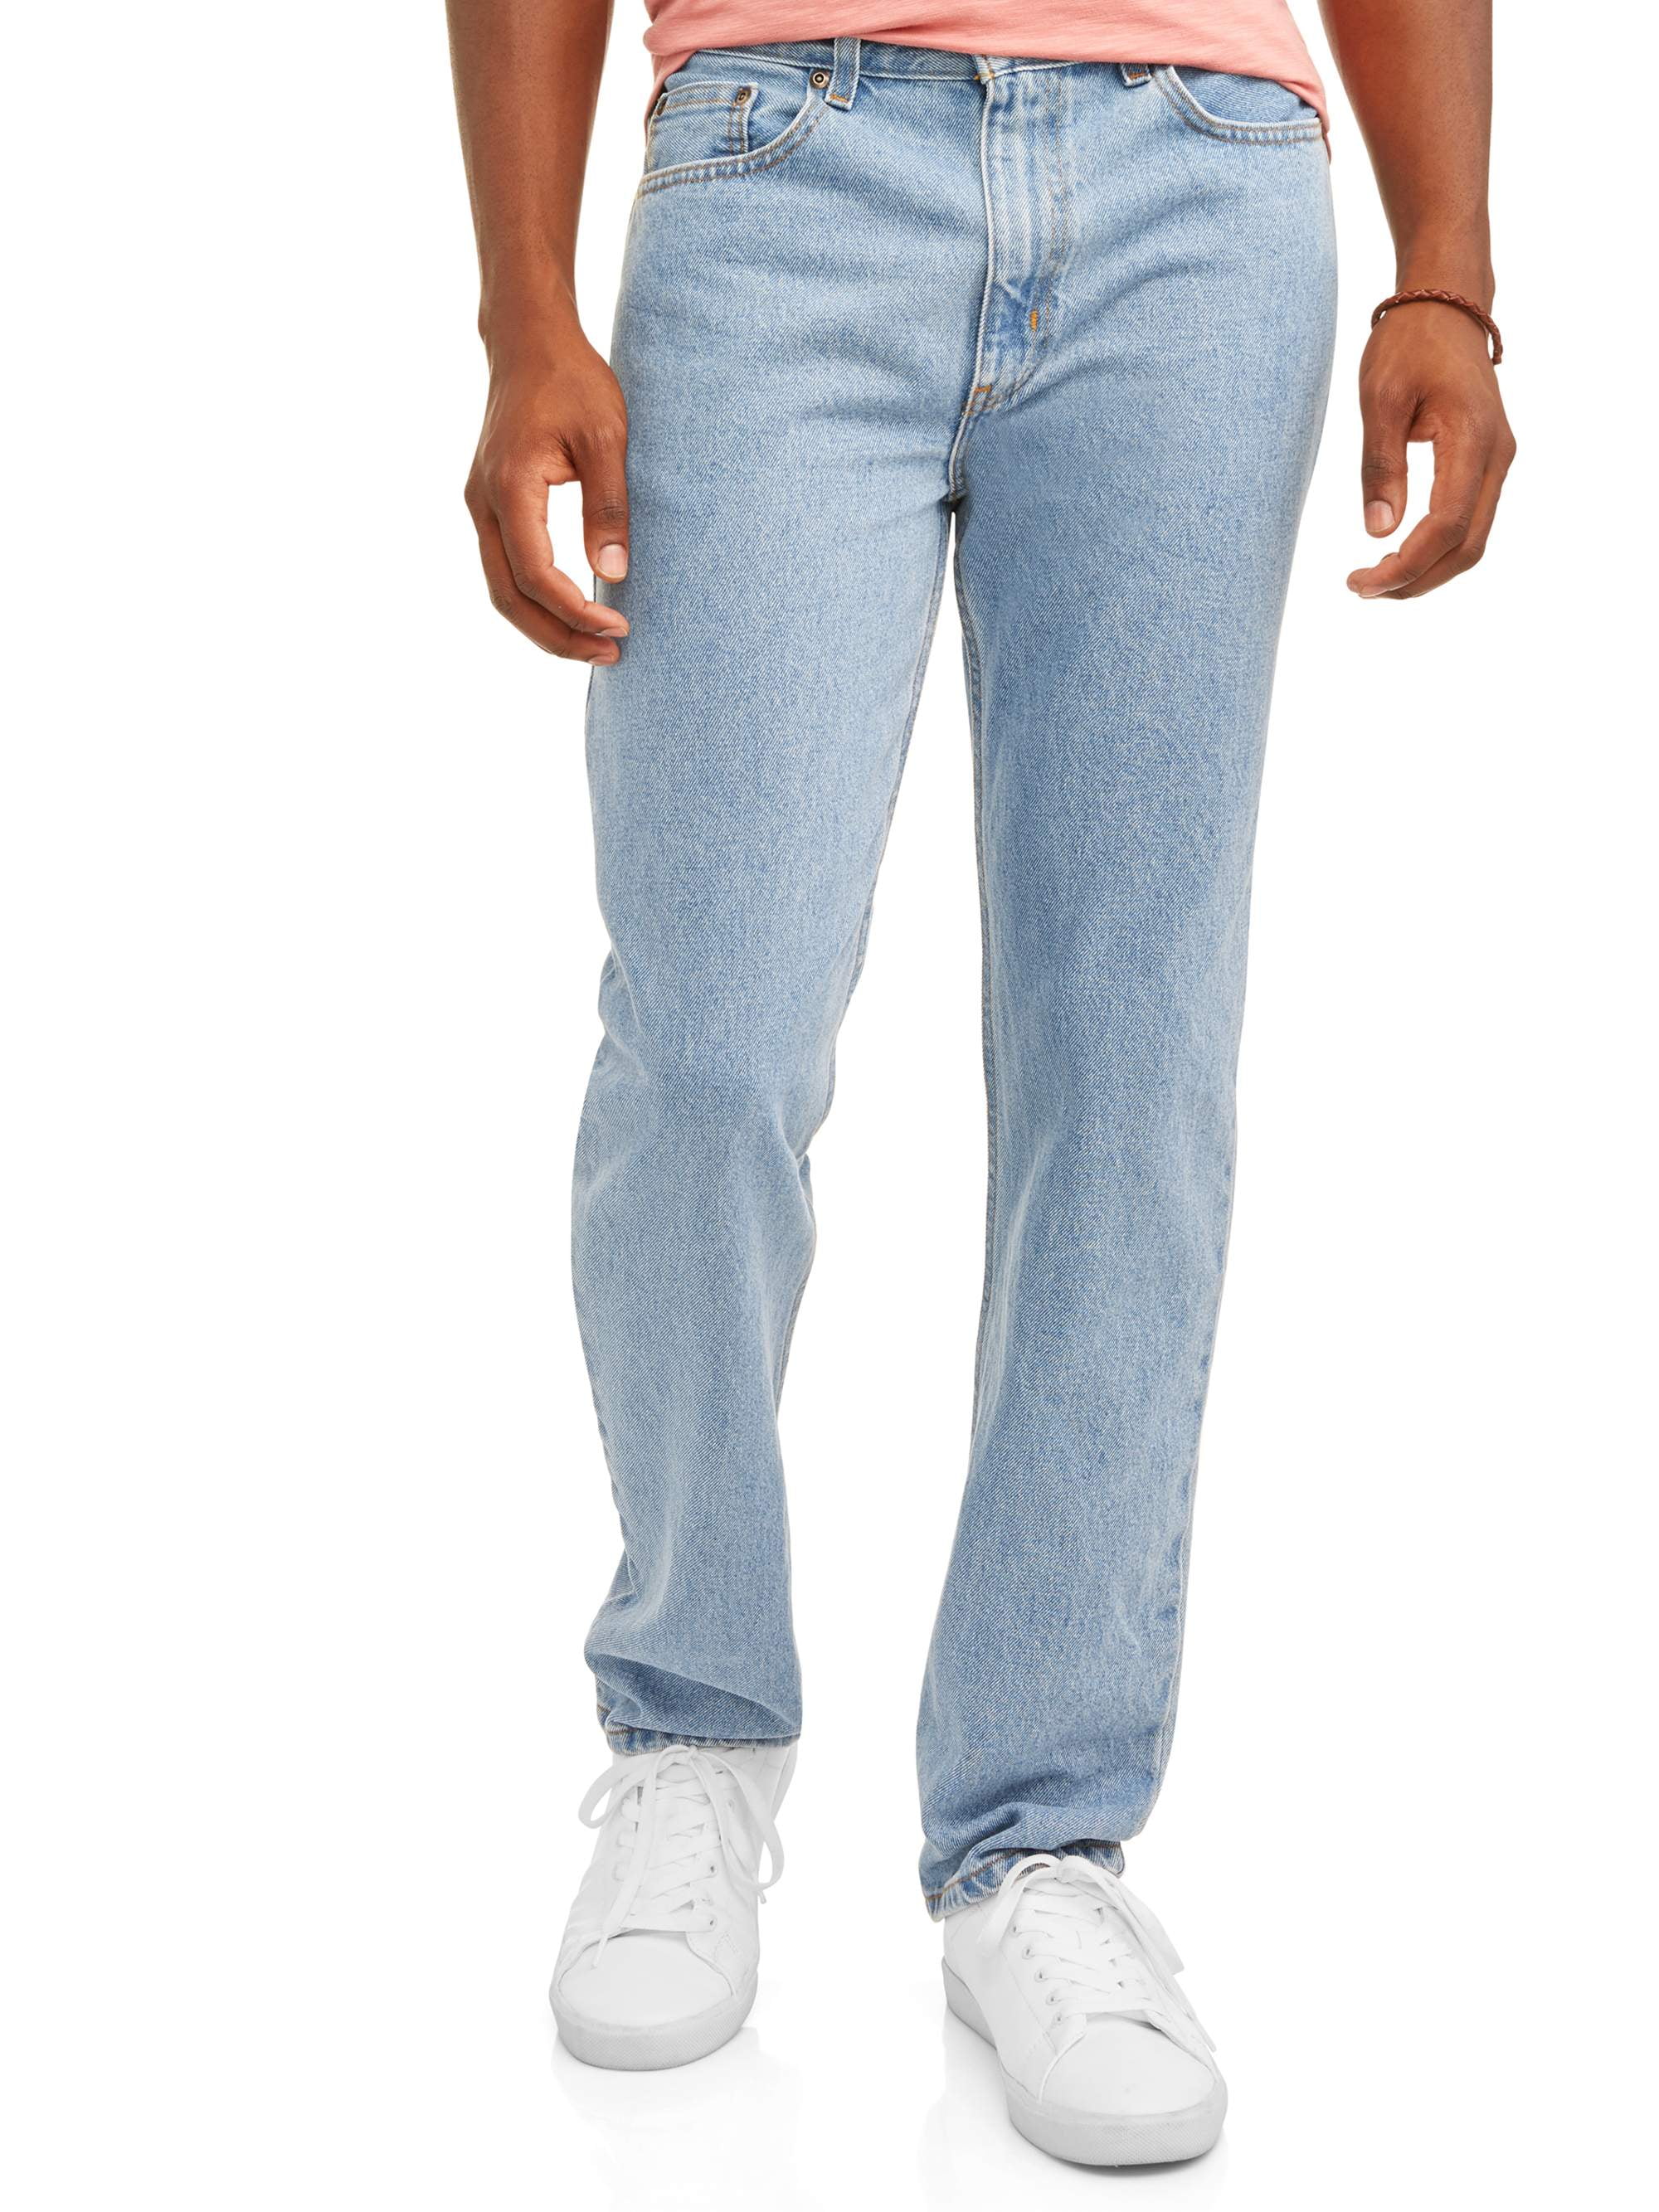 29 33 Mens Regular Comfort Standard Fit Zip Fly Denim Jeans Size 28 to 60 Inside Leg 27 31